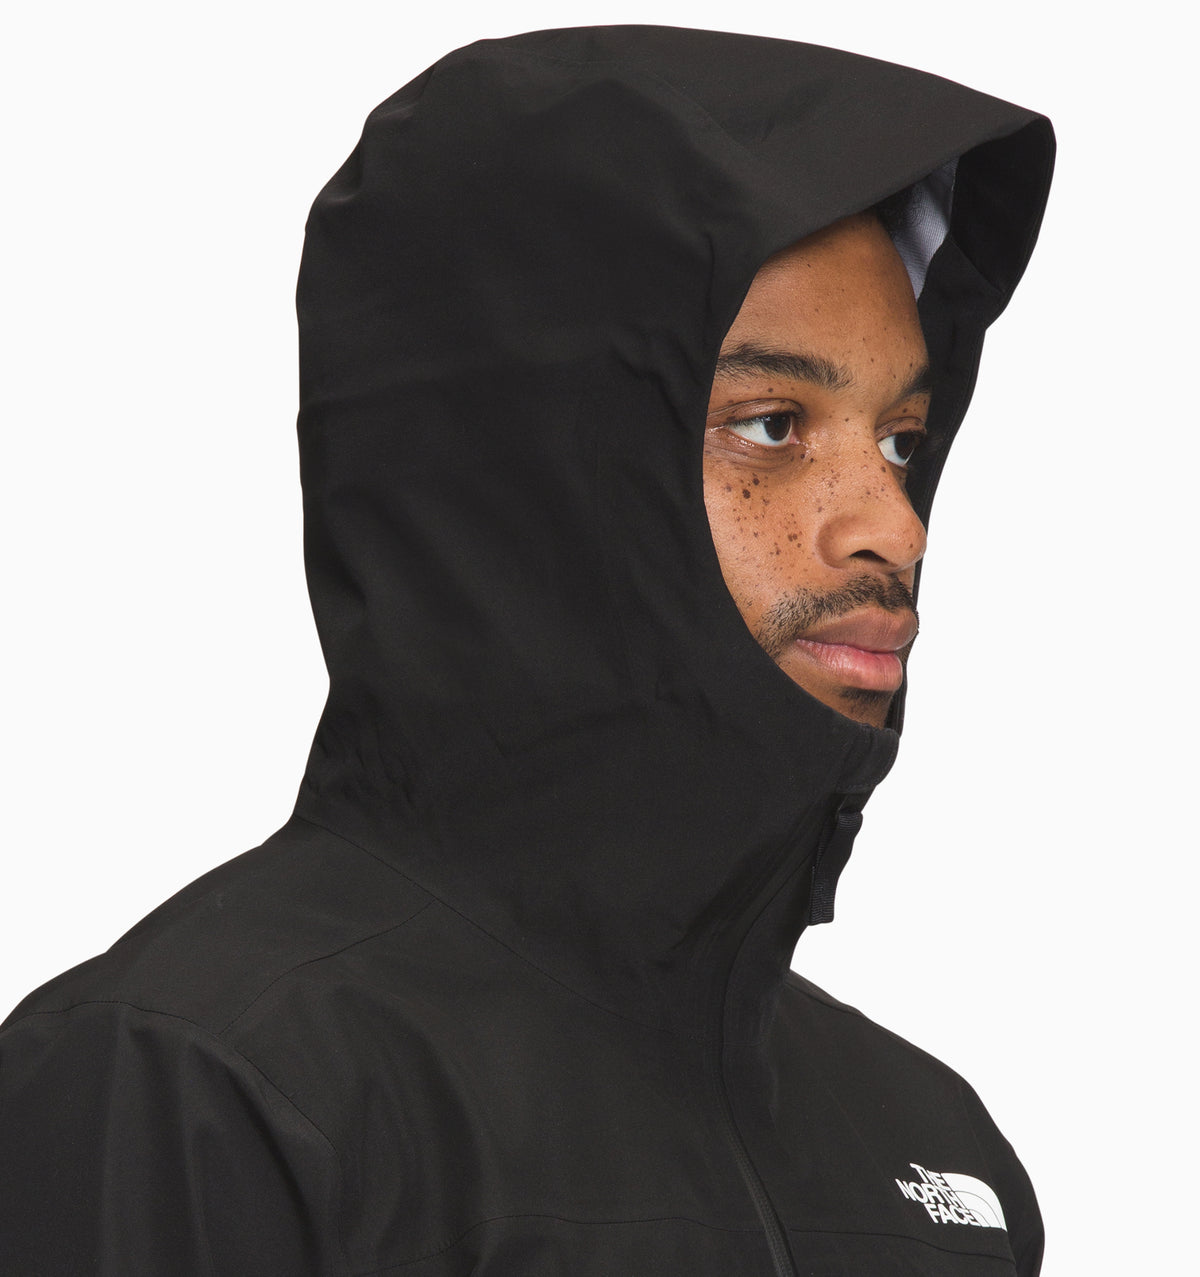 The North Face Men's Dryzzle Futurelight Jacket - 2022 Edition - Black